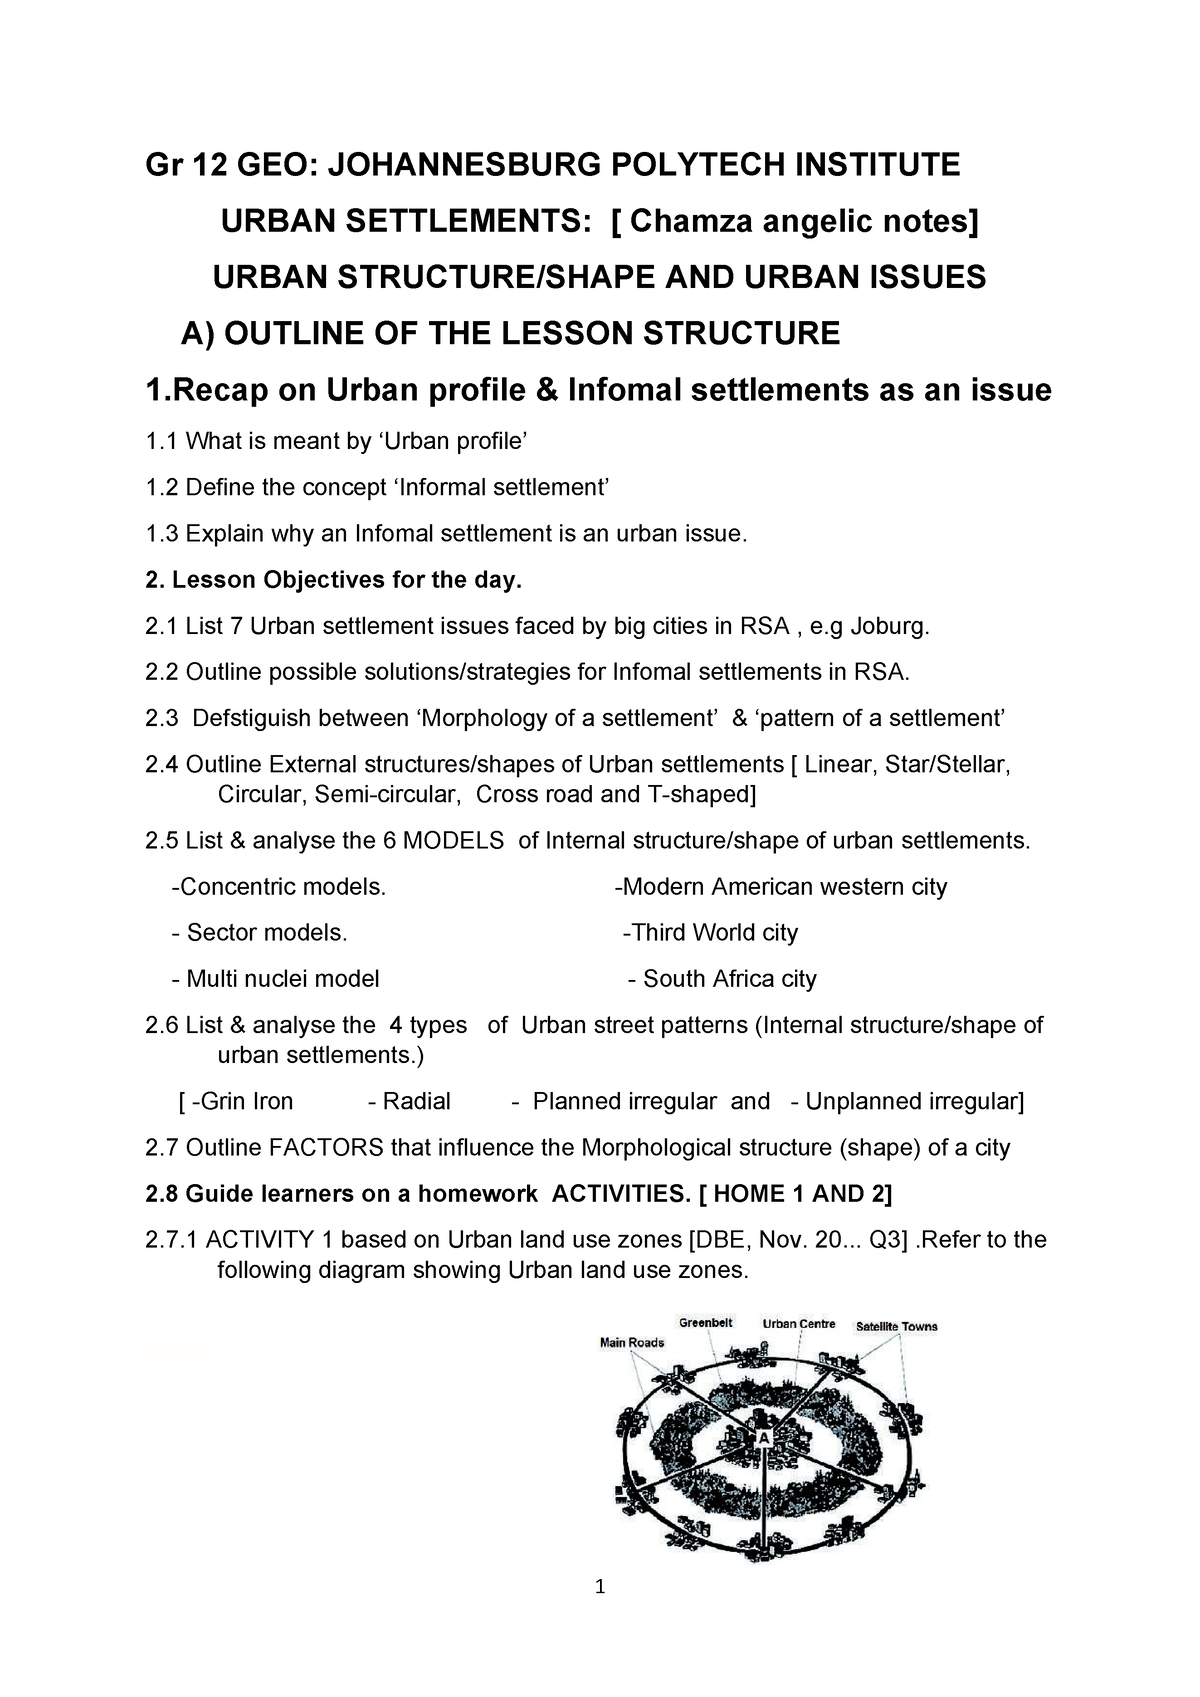 Gr 12 Urban Settlemts JUNE L1 F - Gr 12 GEO: JOHANNESBURG POLYTECH ...